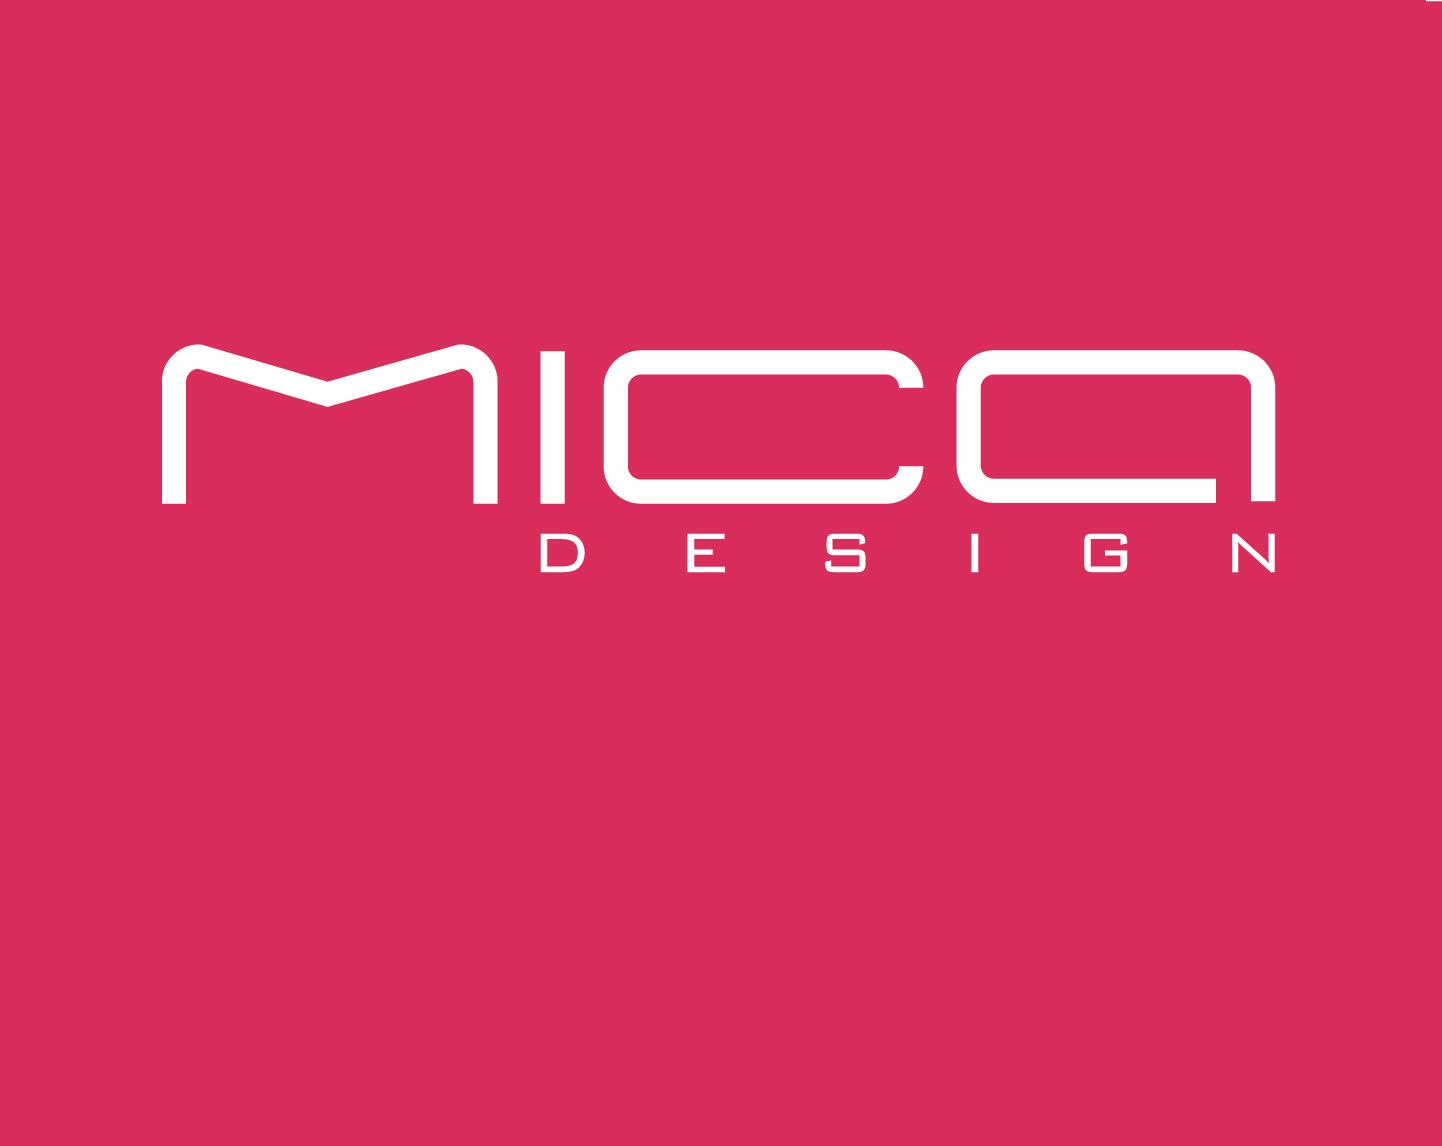 Mica Logo